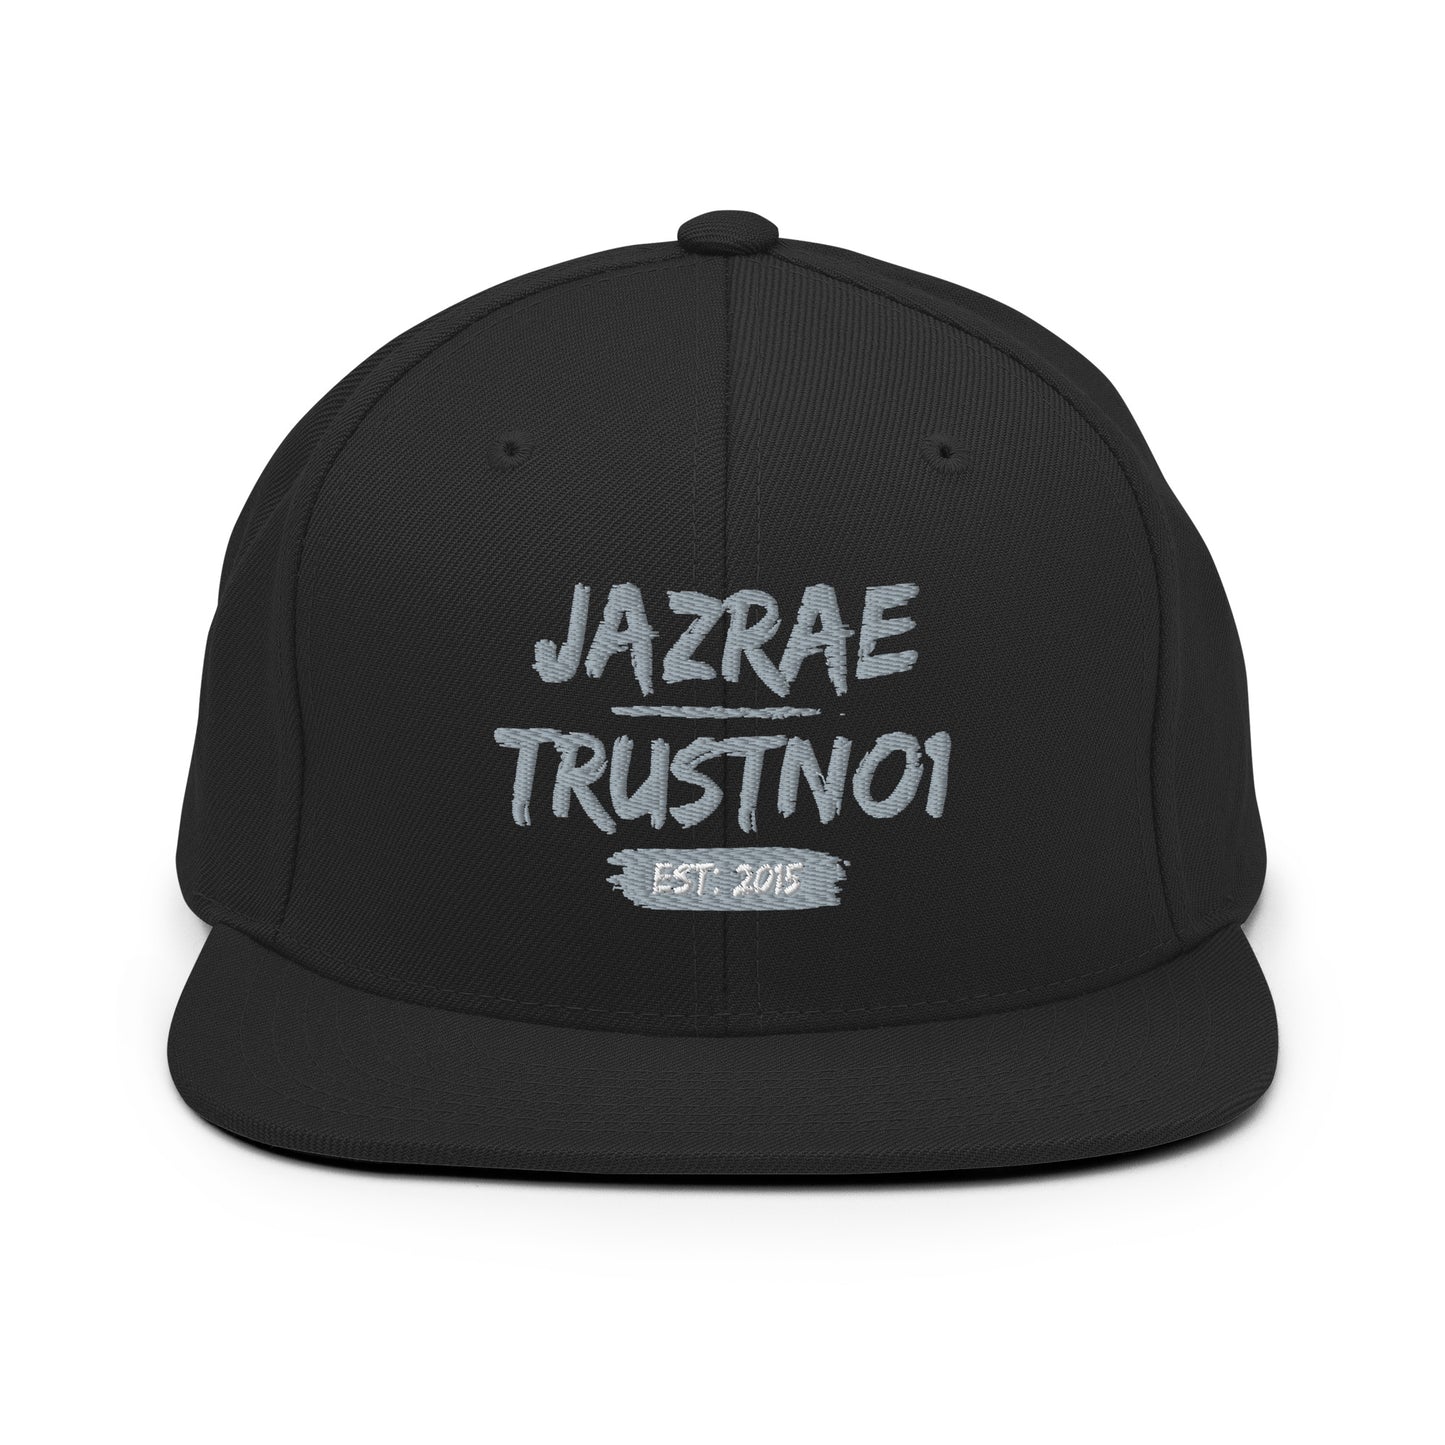 Jazrae Trustno1 Snapback Hat